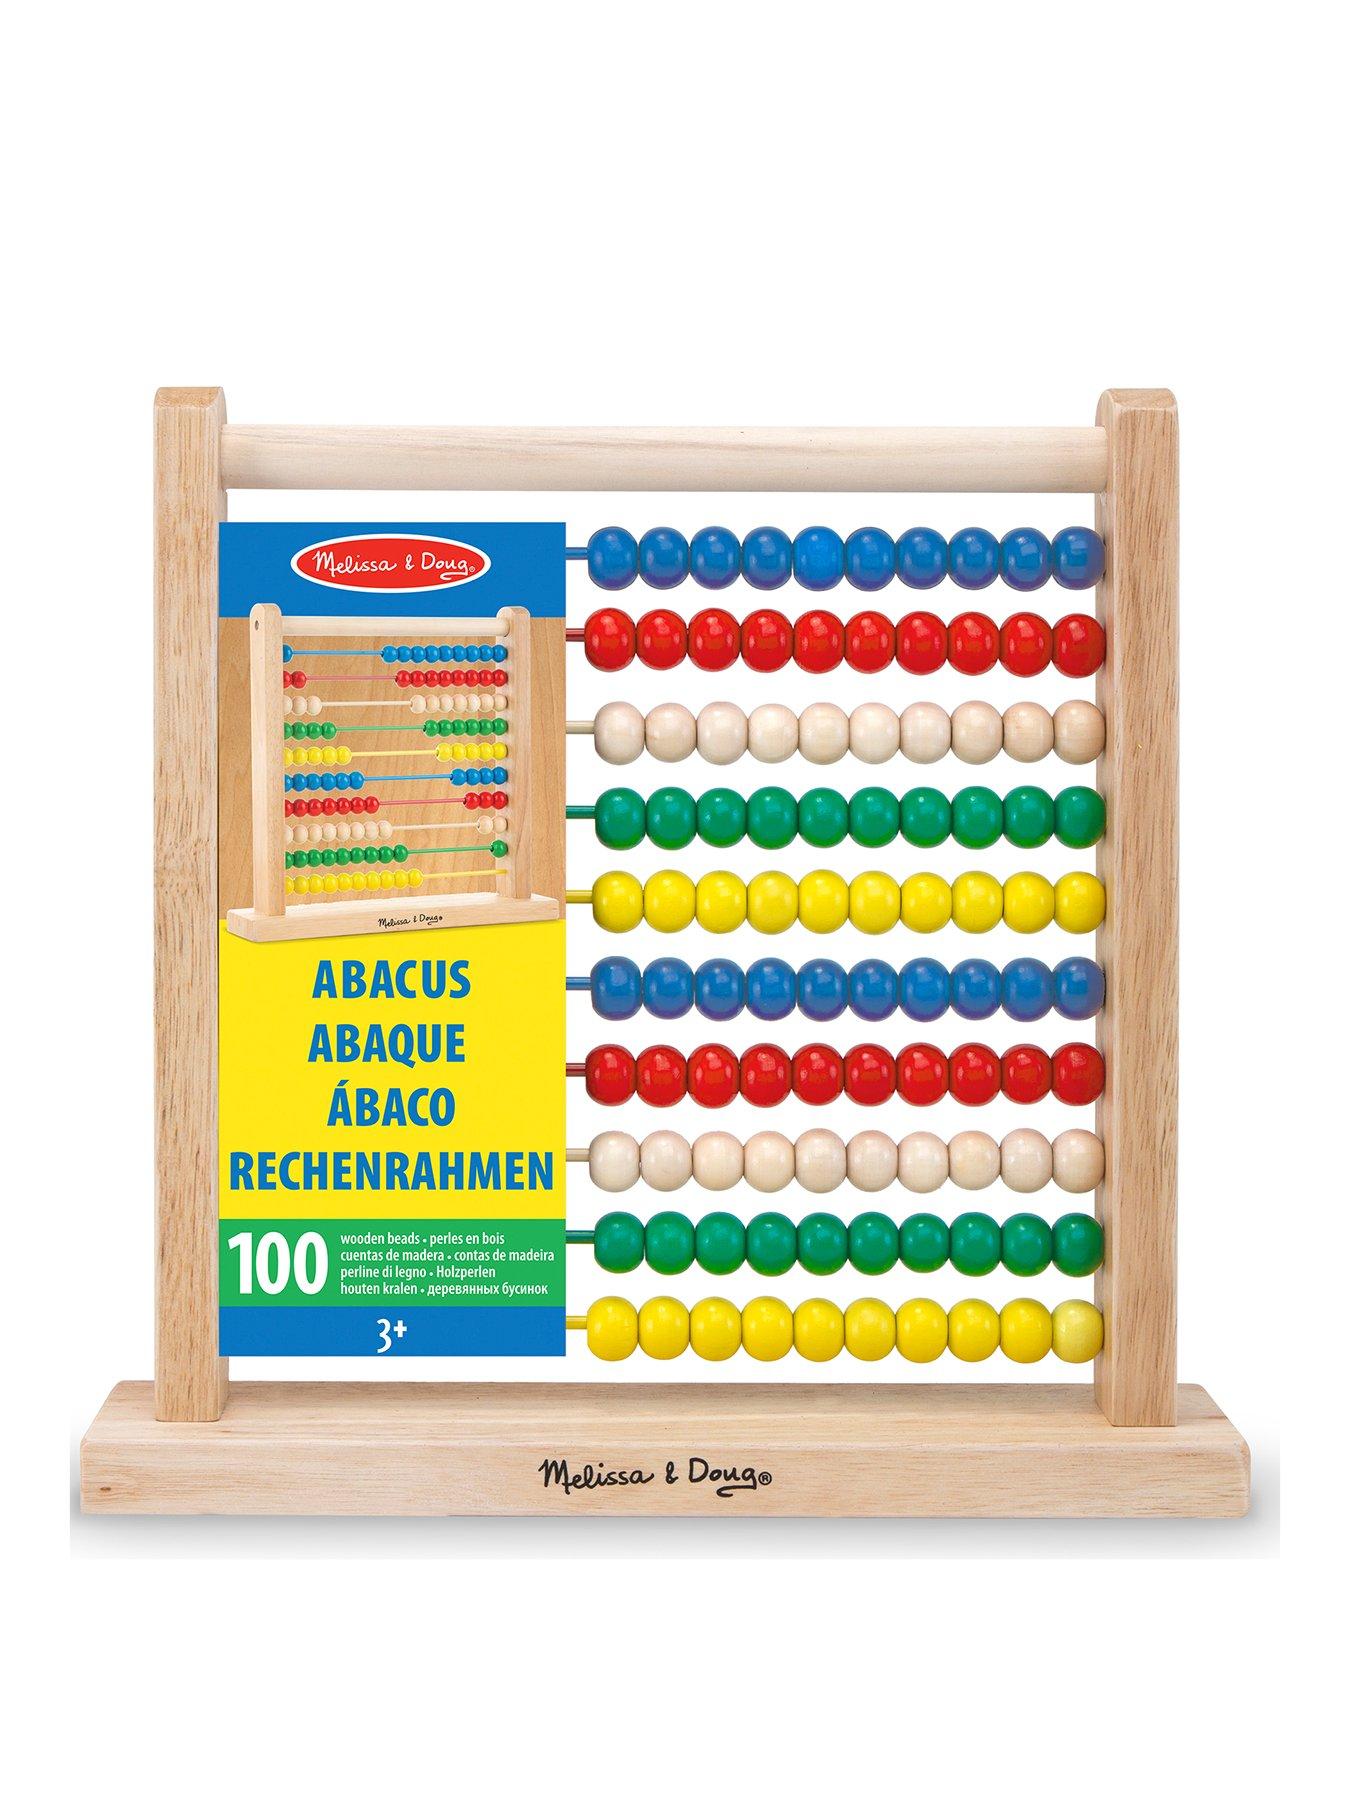 lego harry potter abacus